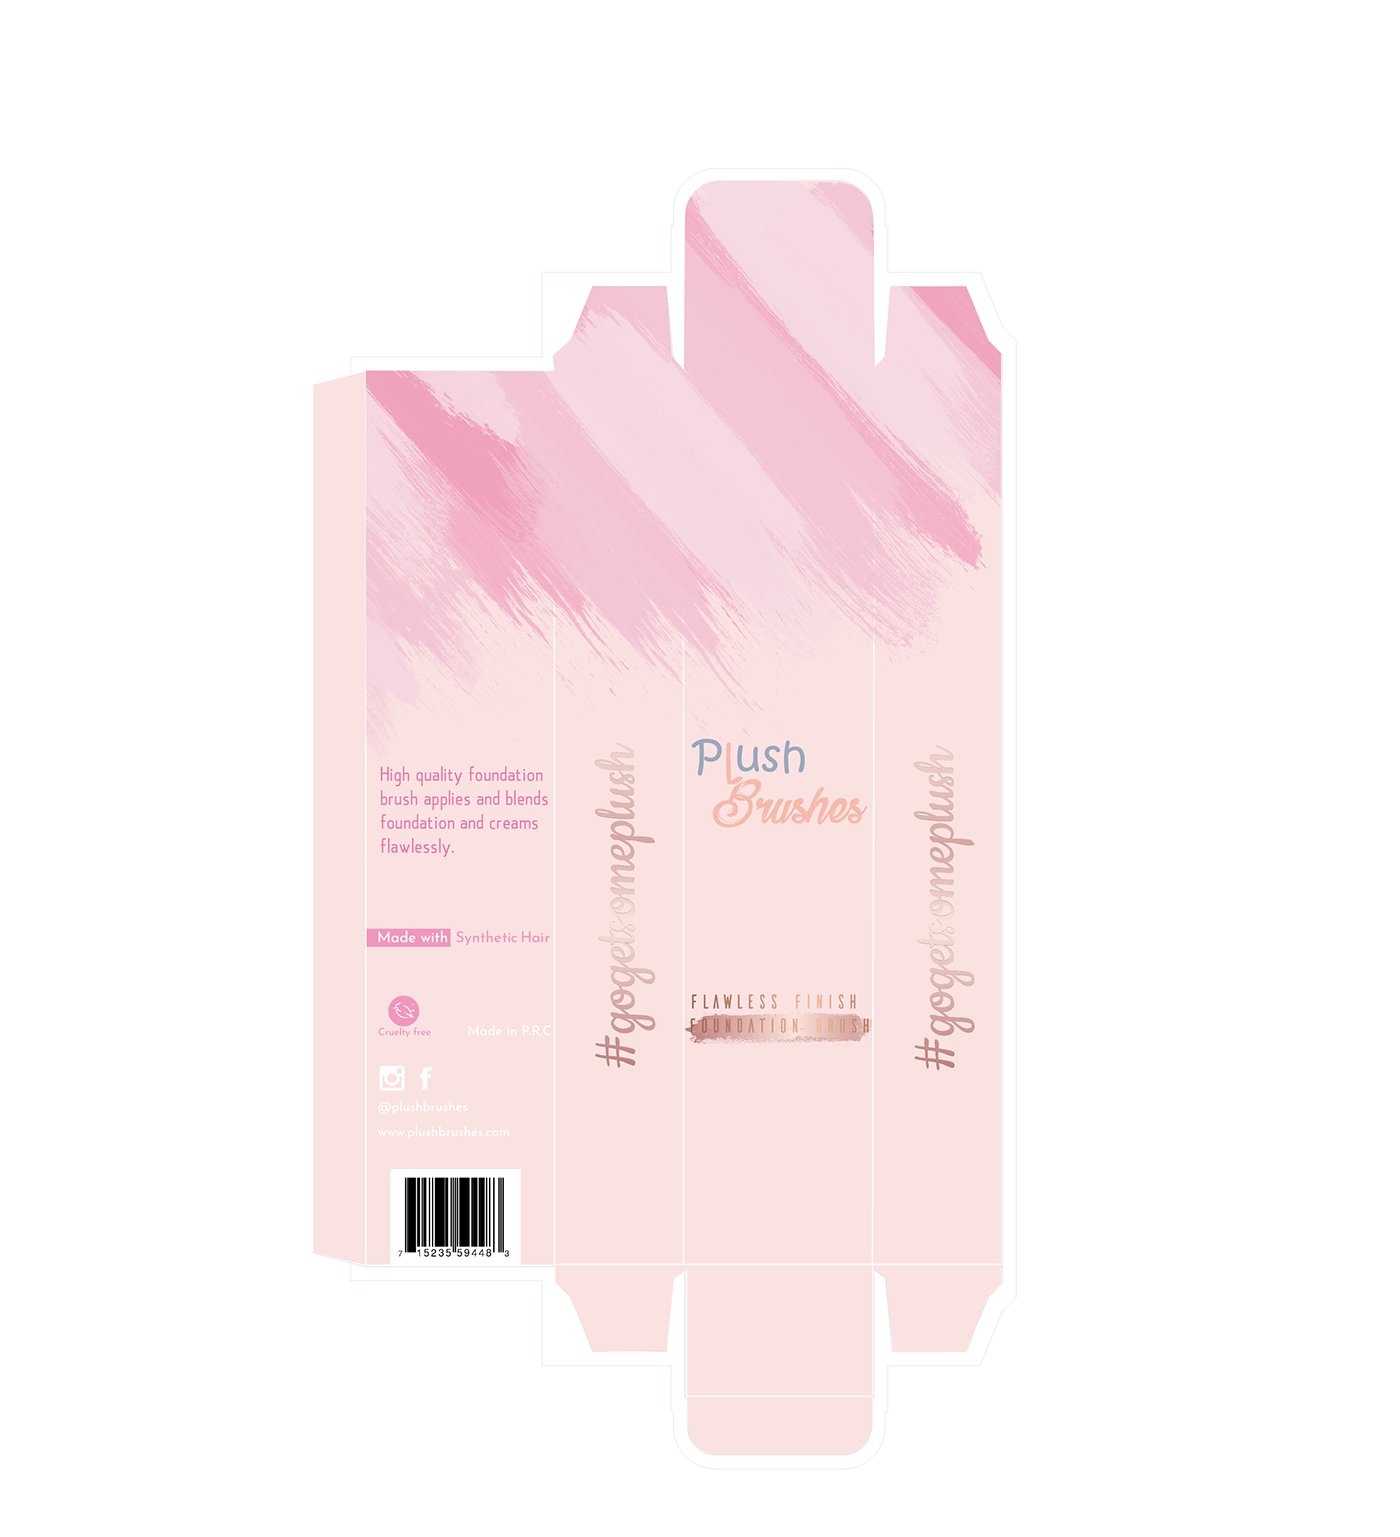 FOUNDATION BRUSH Cosmetic pink Rose Gold elegant paint strok modern Packaging sleek